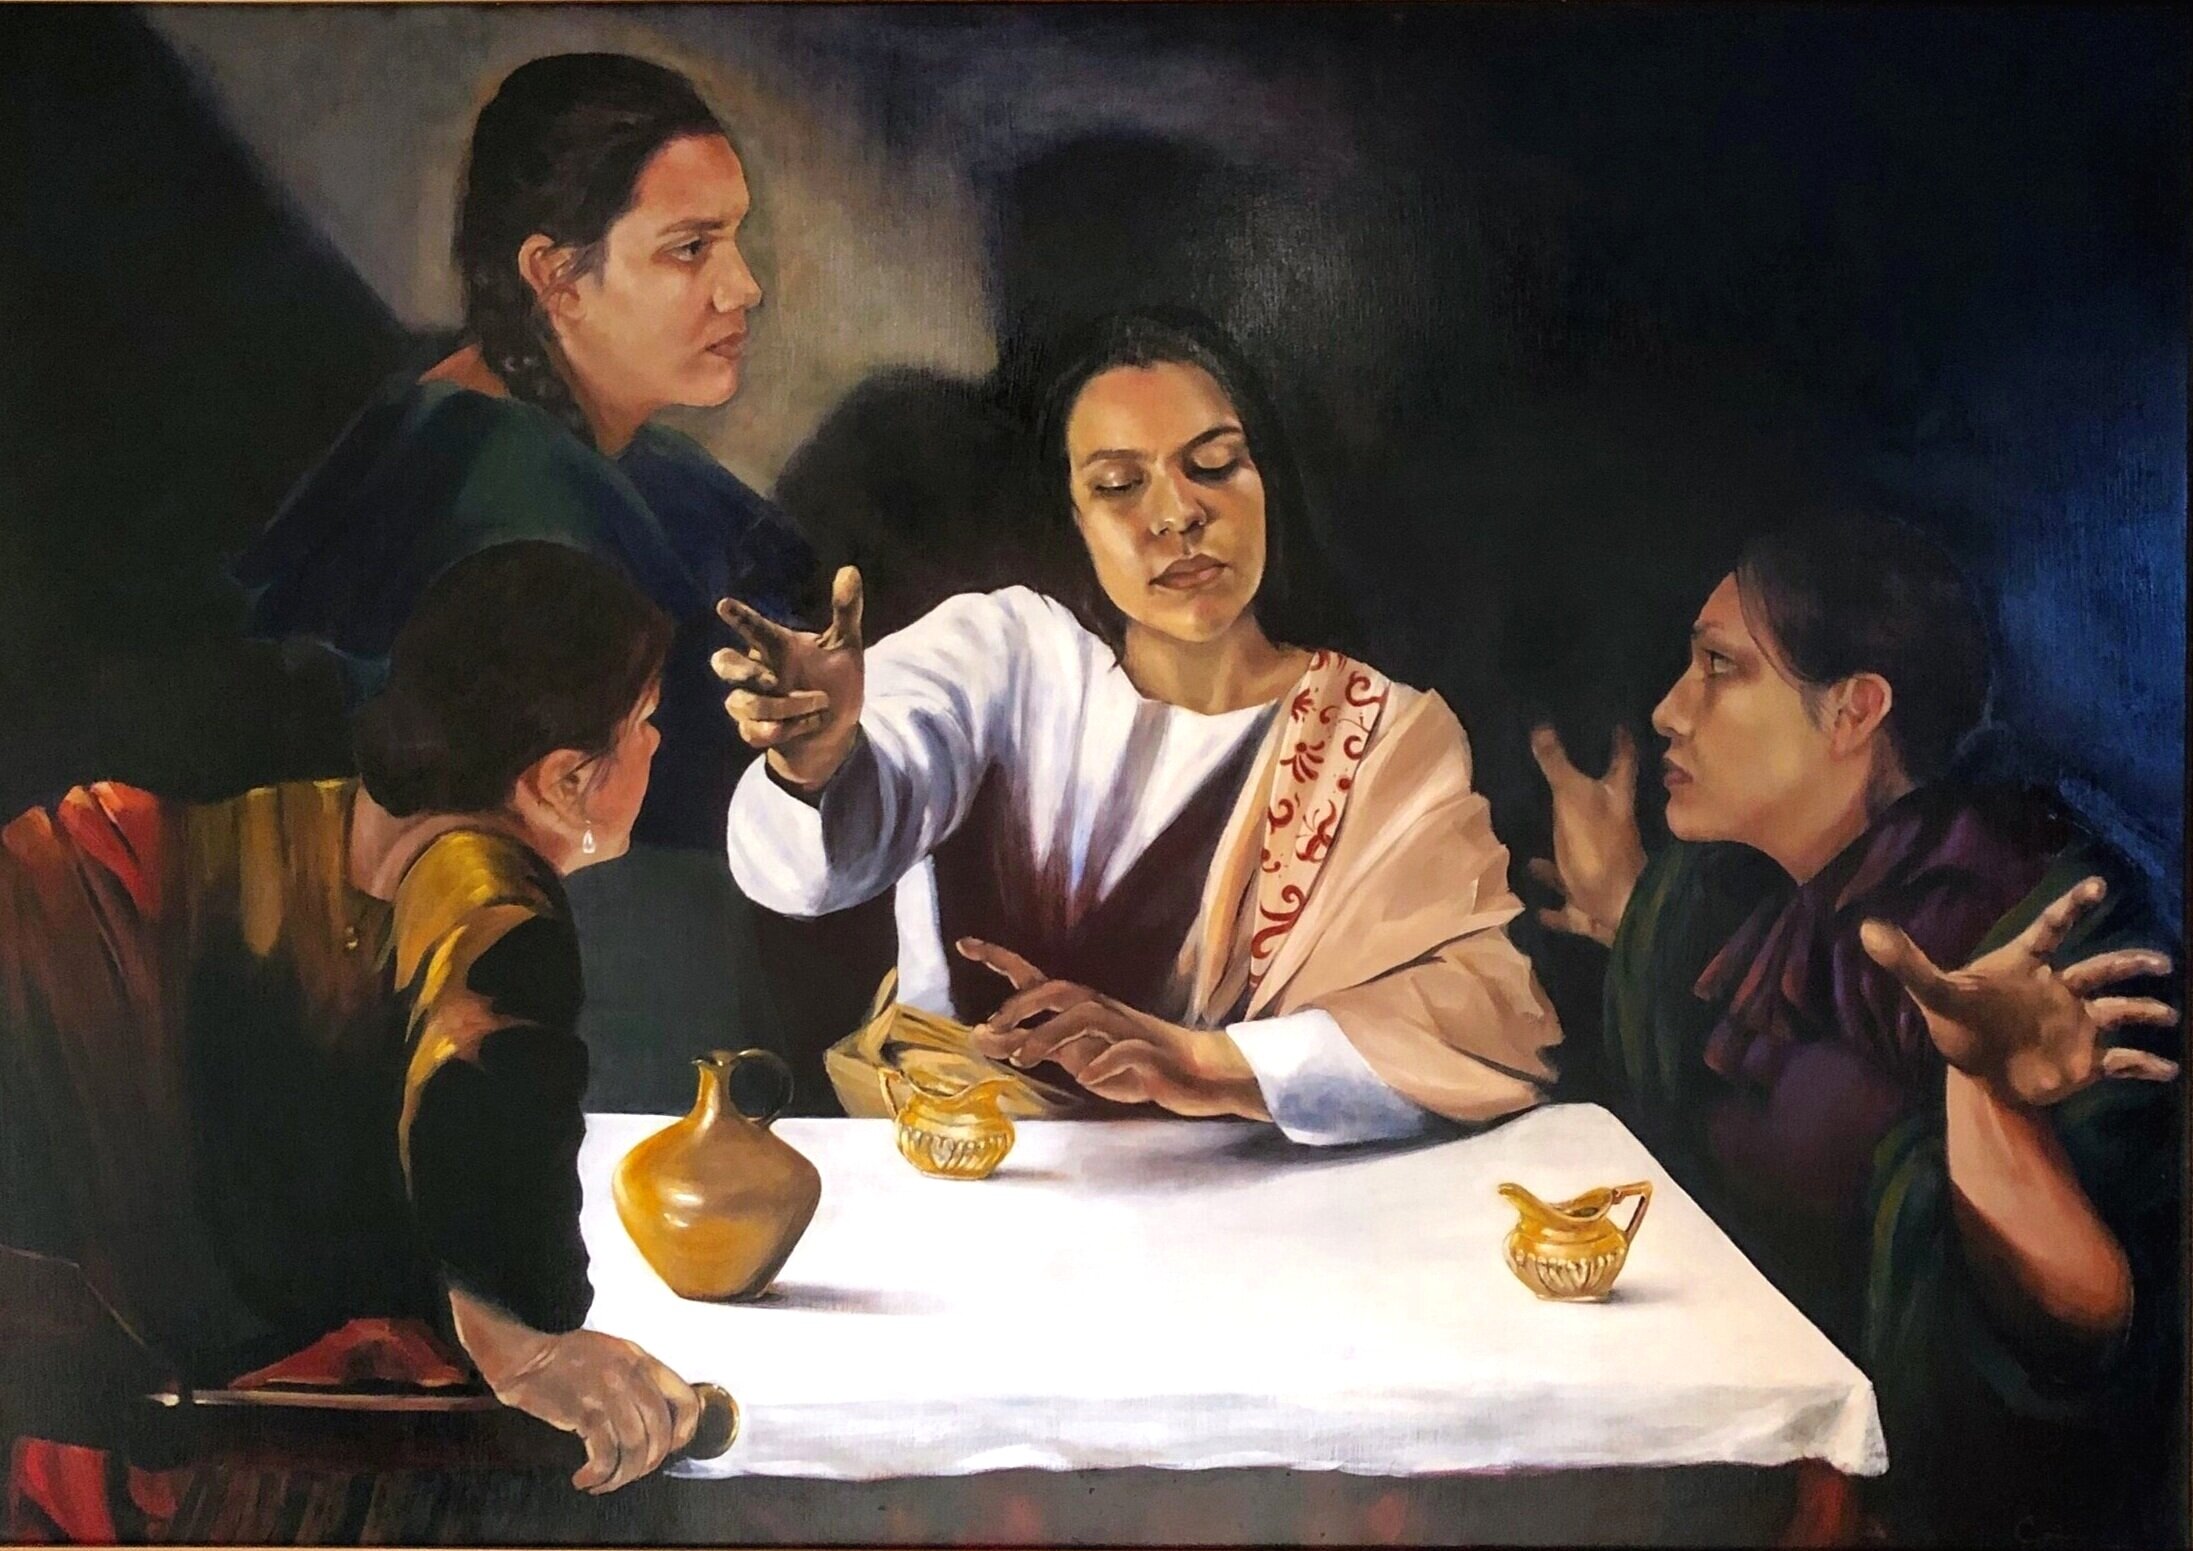   "Dialogo de La Sombra"- Dialogue of the Shadow   $3,000  41.5” X 46.5”  Oil Painting on Canvas 